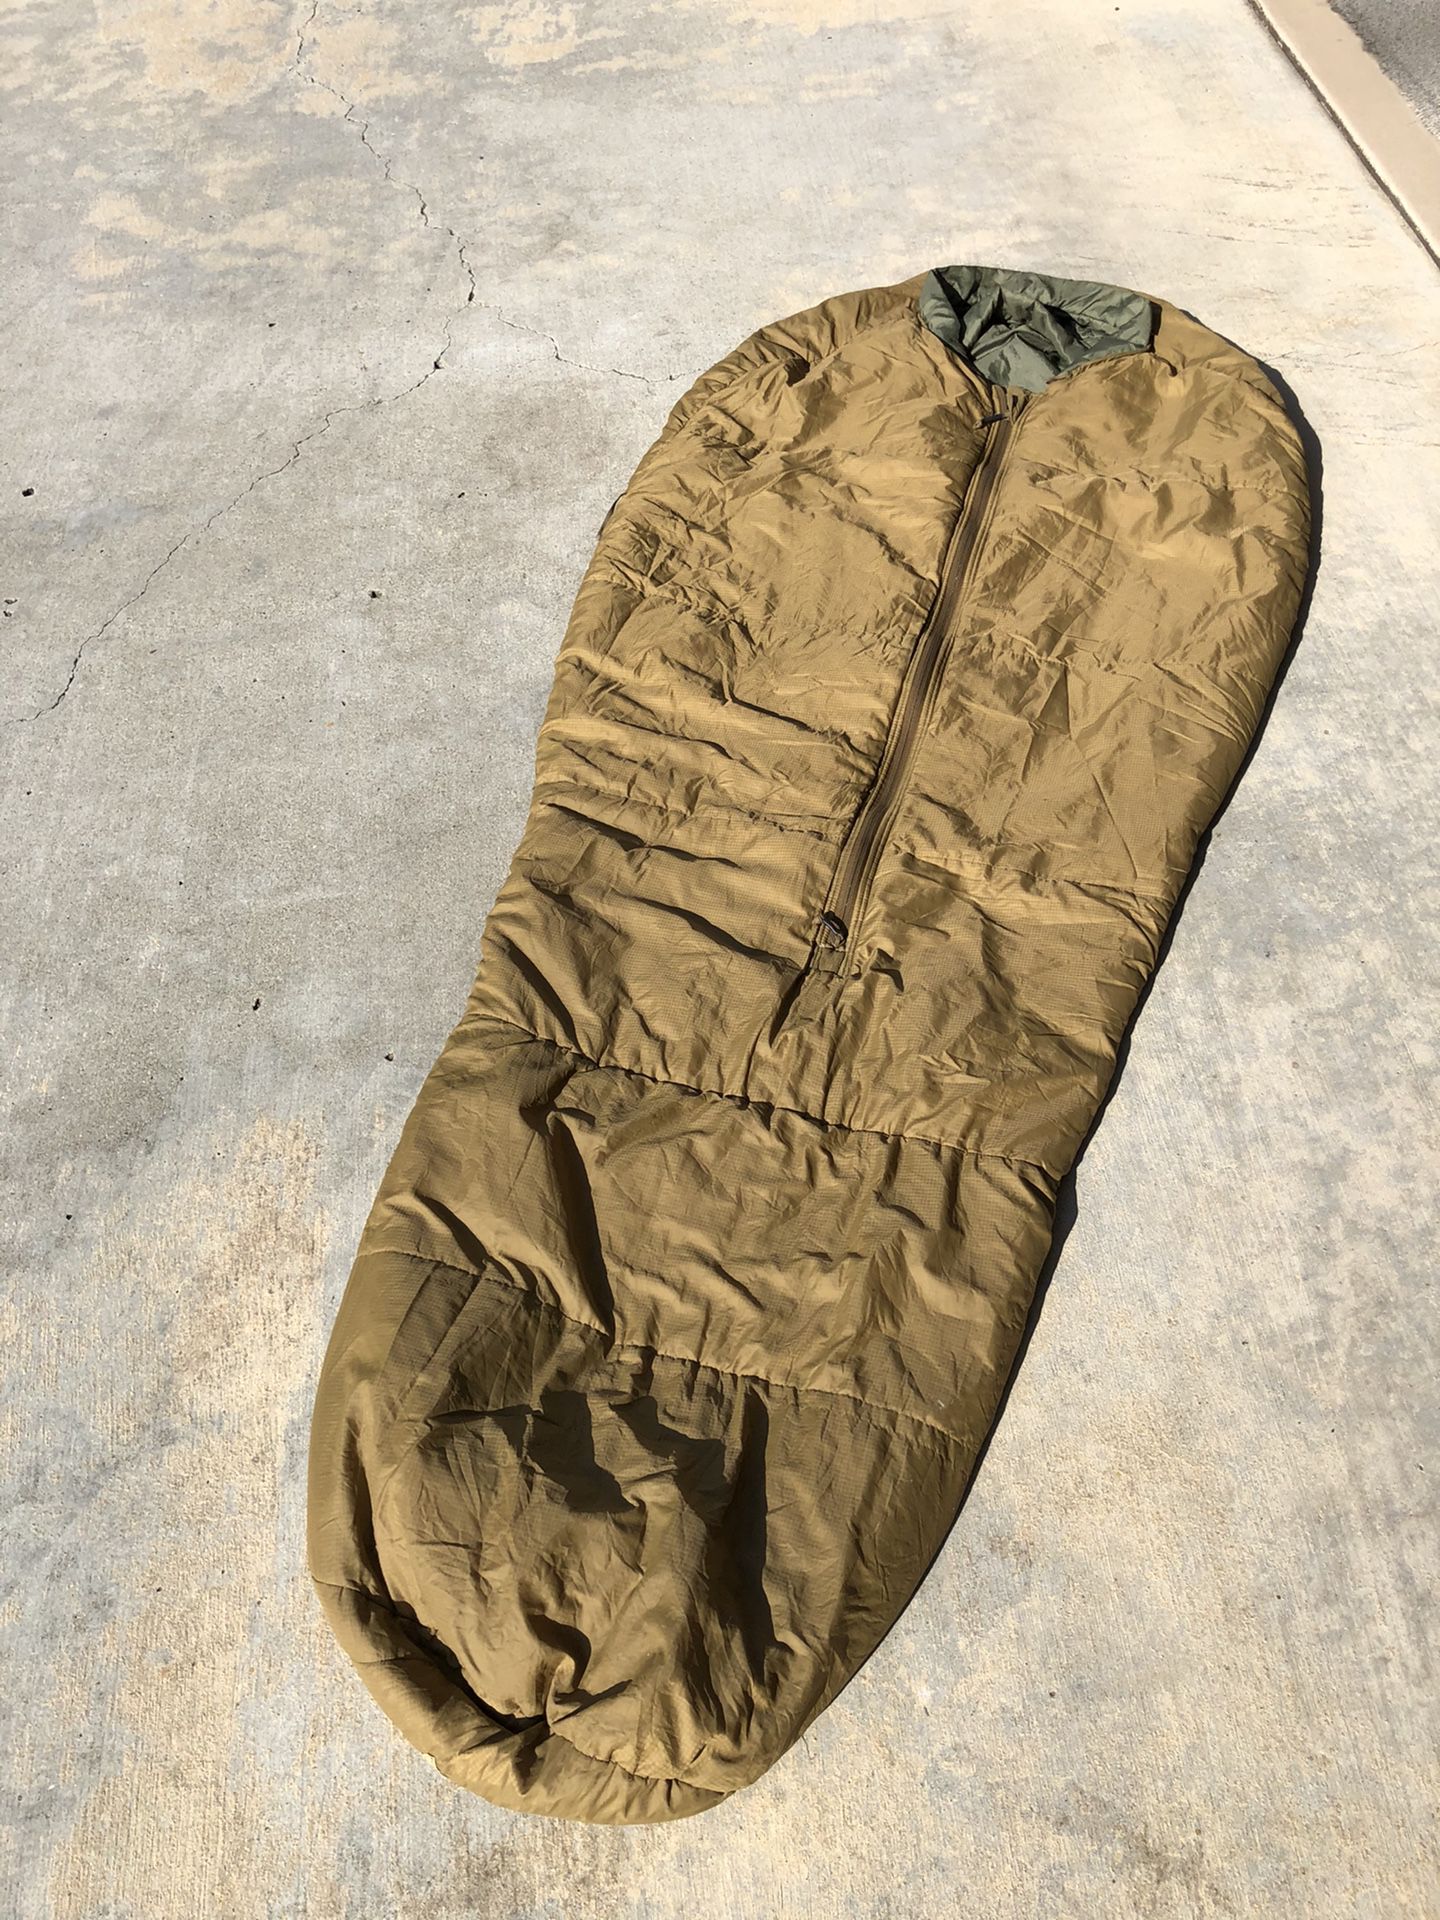 New USMC Cif Issued Sleeping Bag Coyote